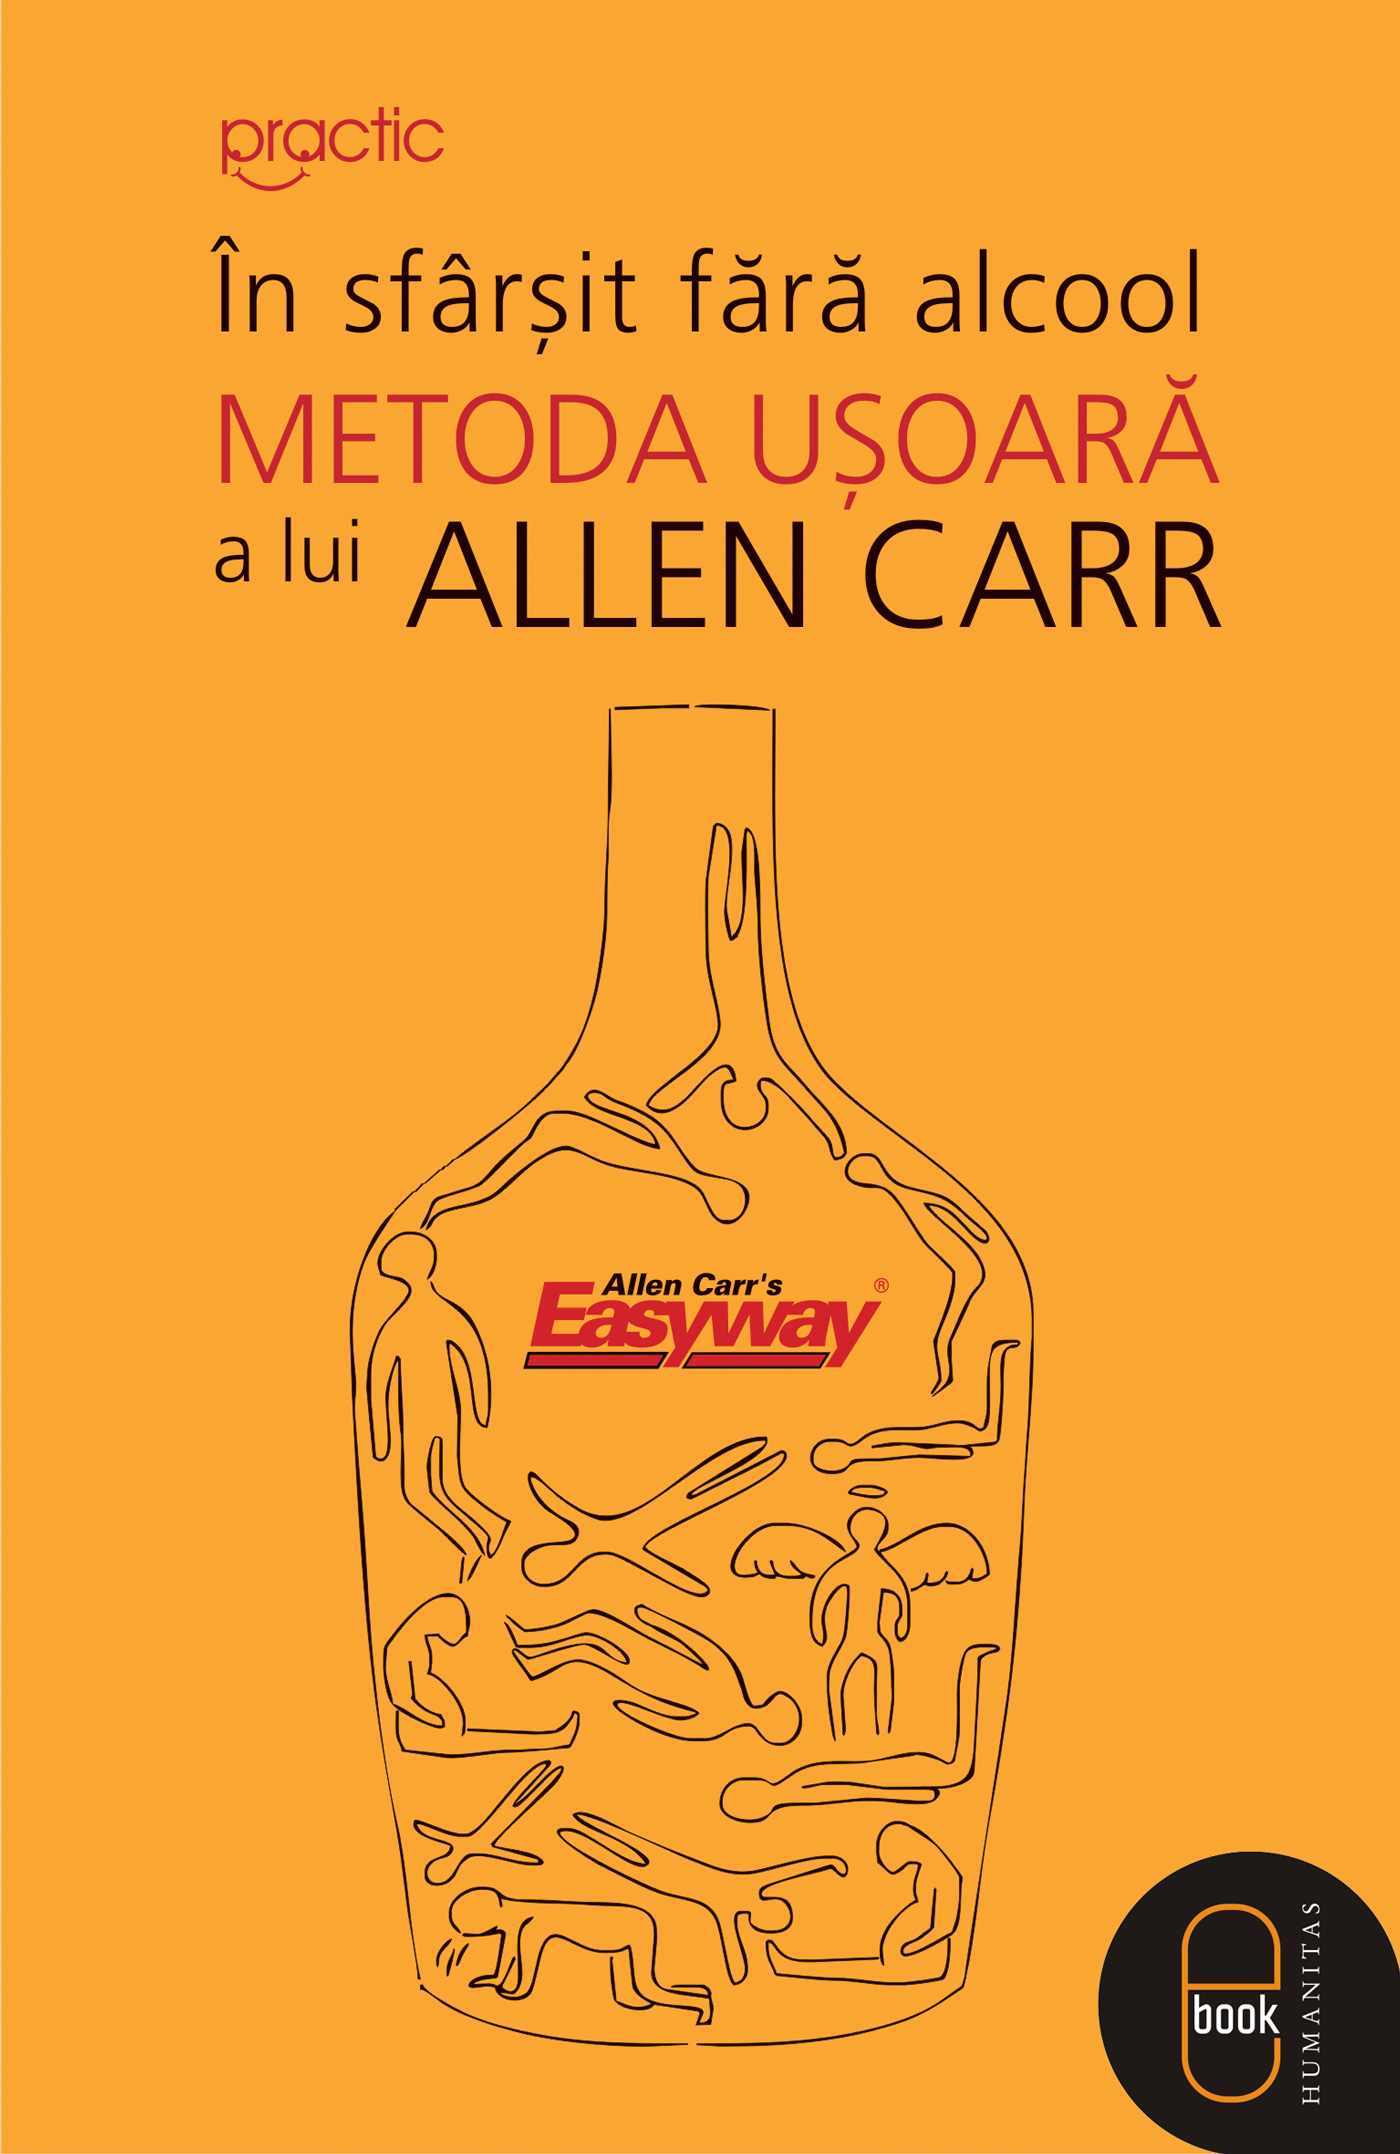 In sfarsit fara alcool: Metoda usoara a lui Allen Carr (pdf)